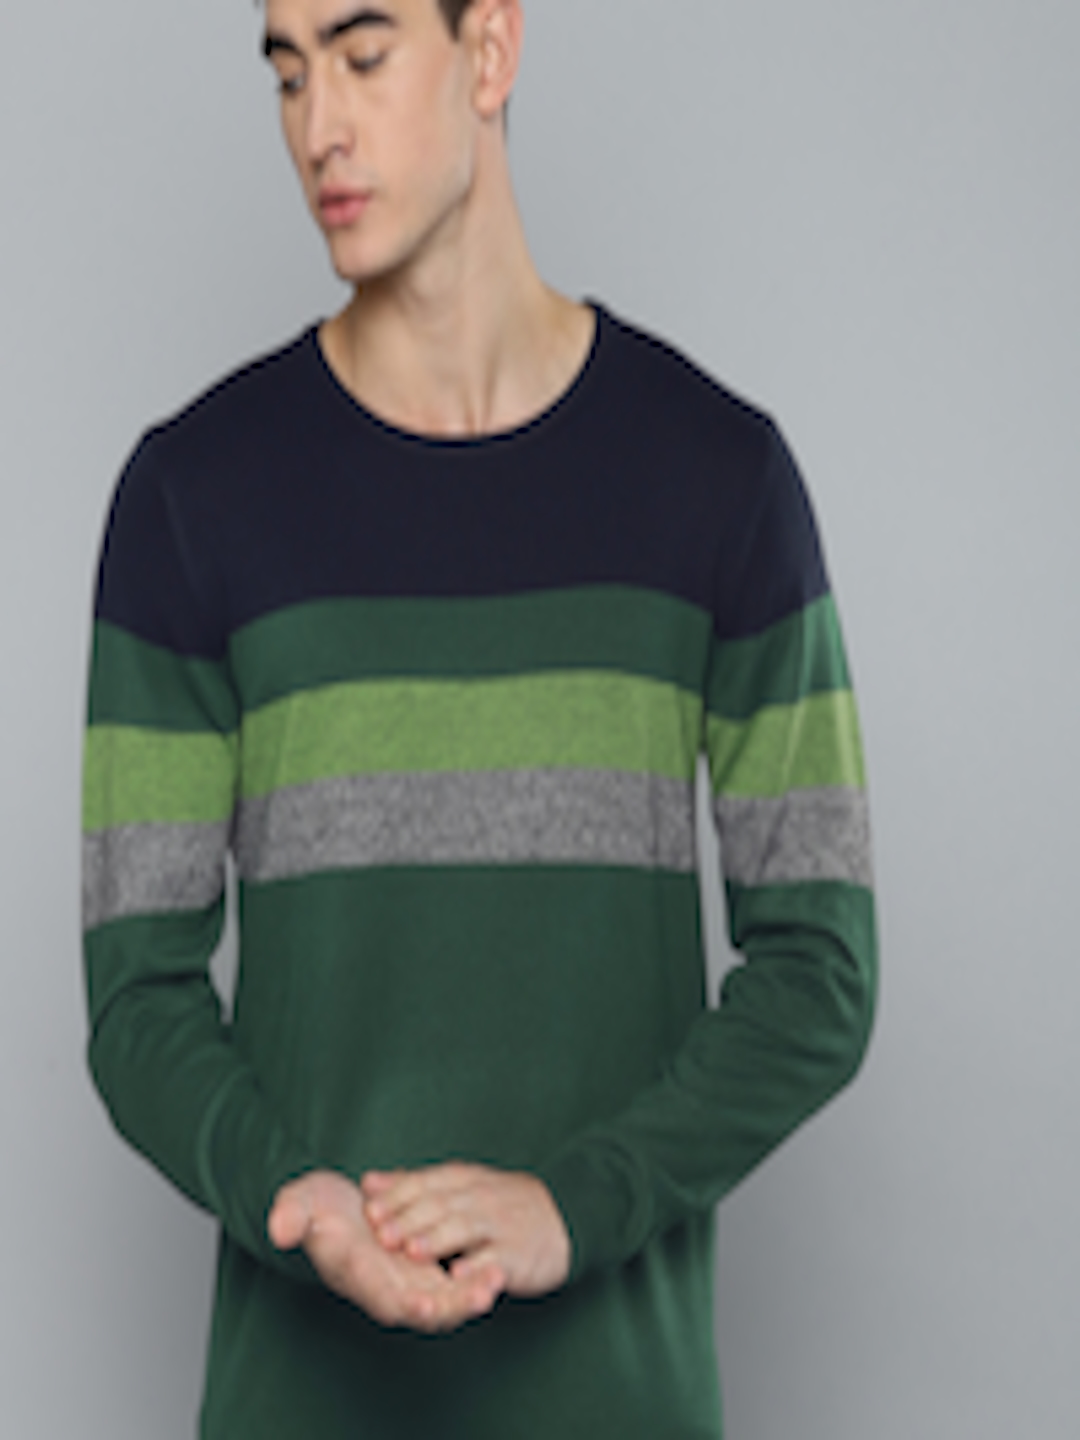 Buy Harvard Men Green & Navy Blue Striped Sweater - Sweaters for Men ...